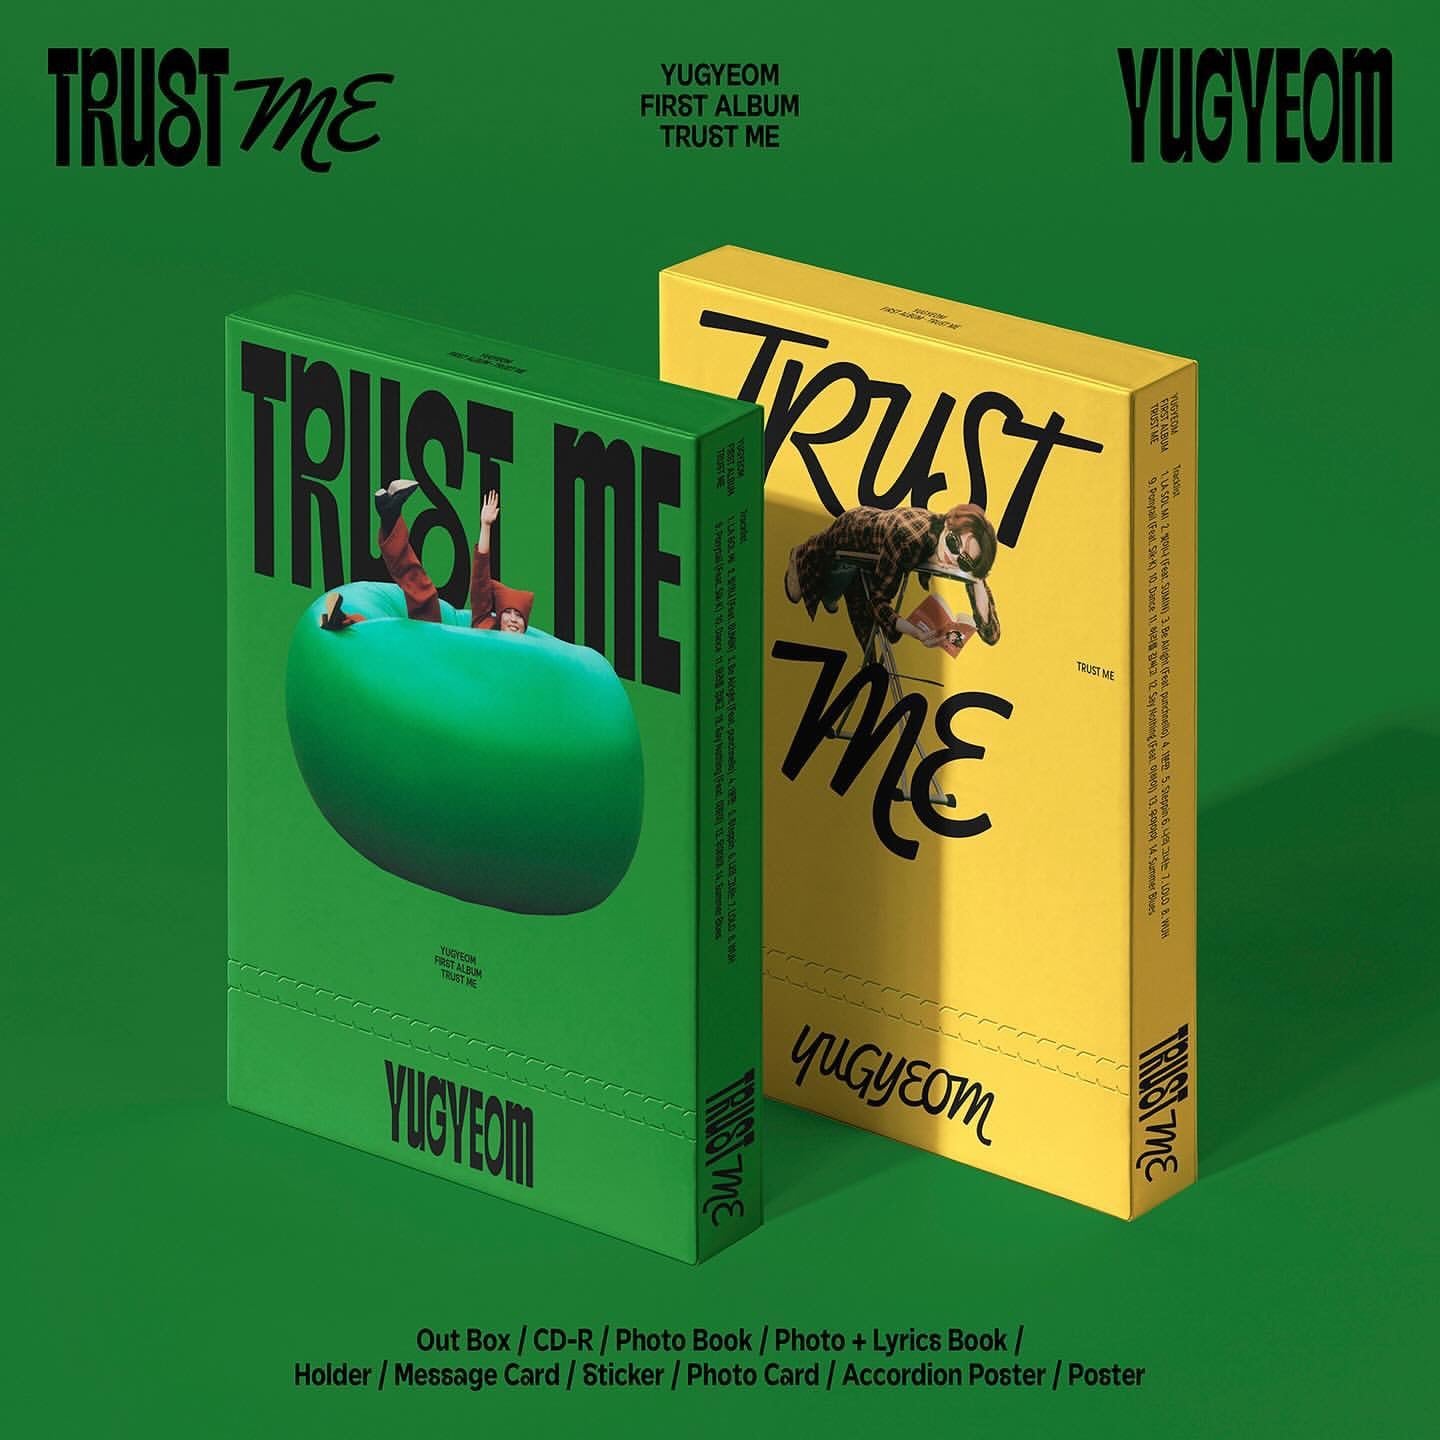 YUGYEOM - TRUST ME (2 VERSIONS)